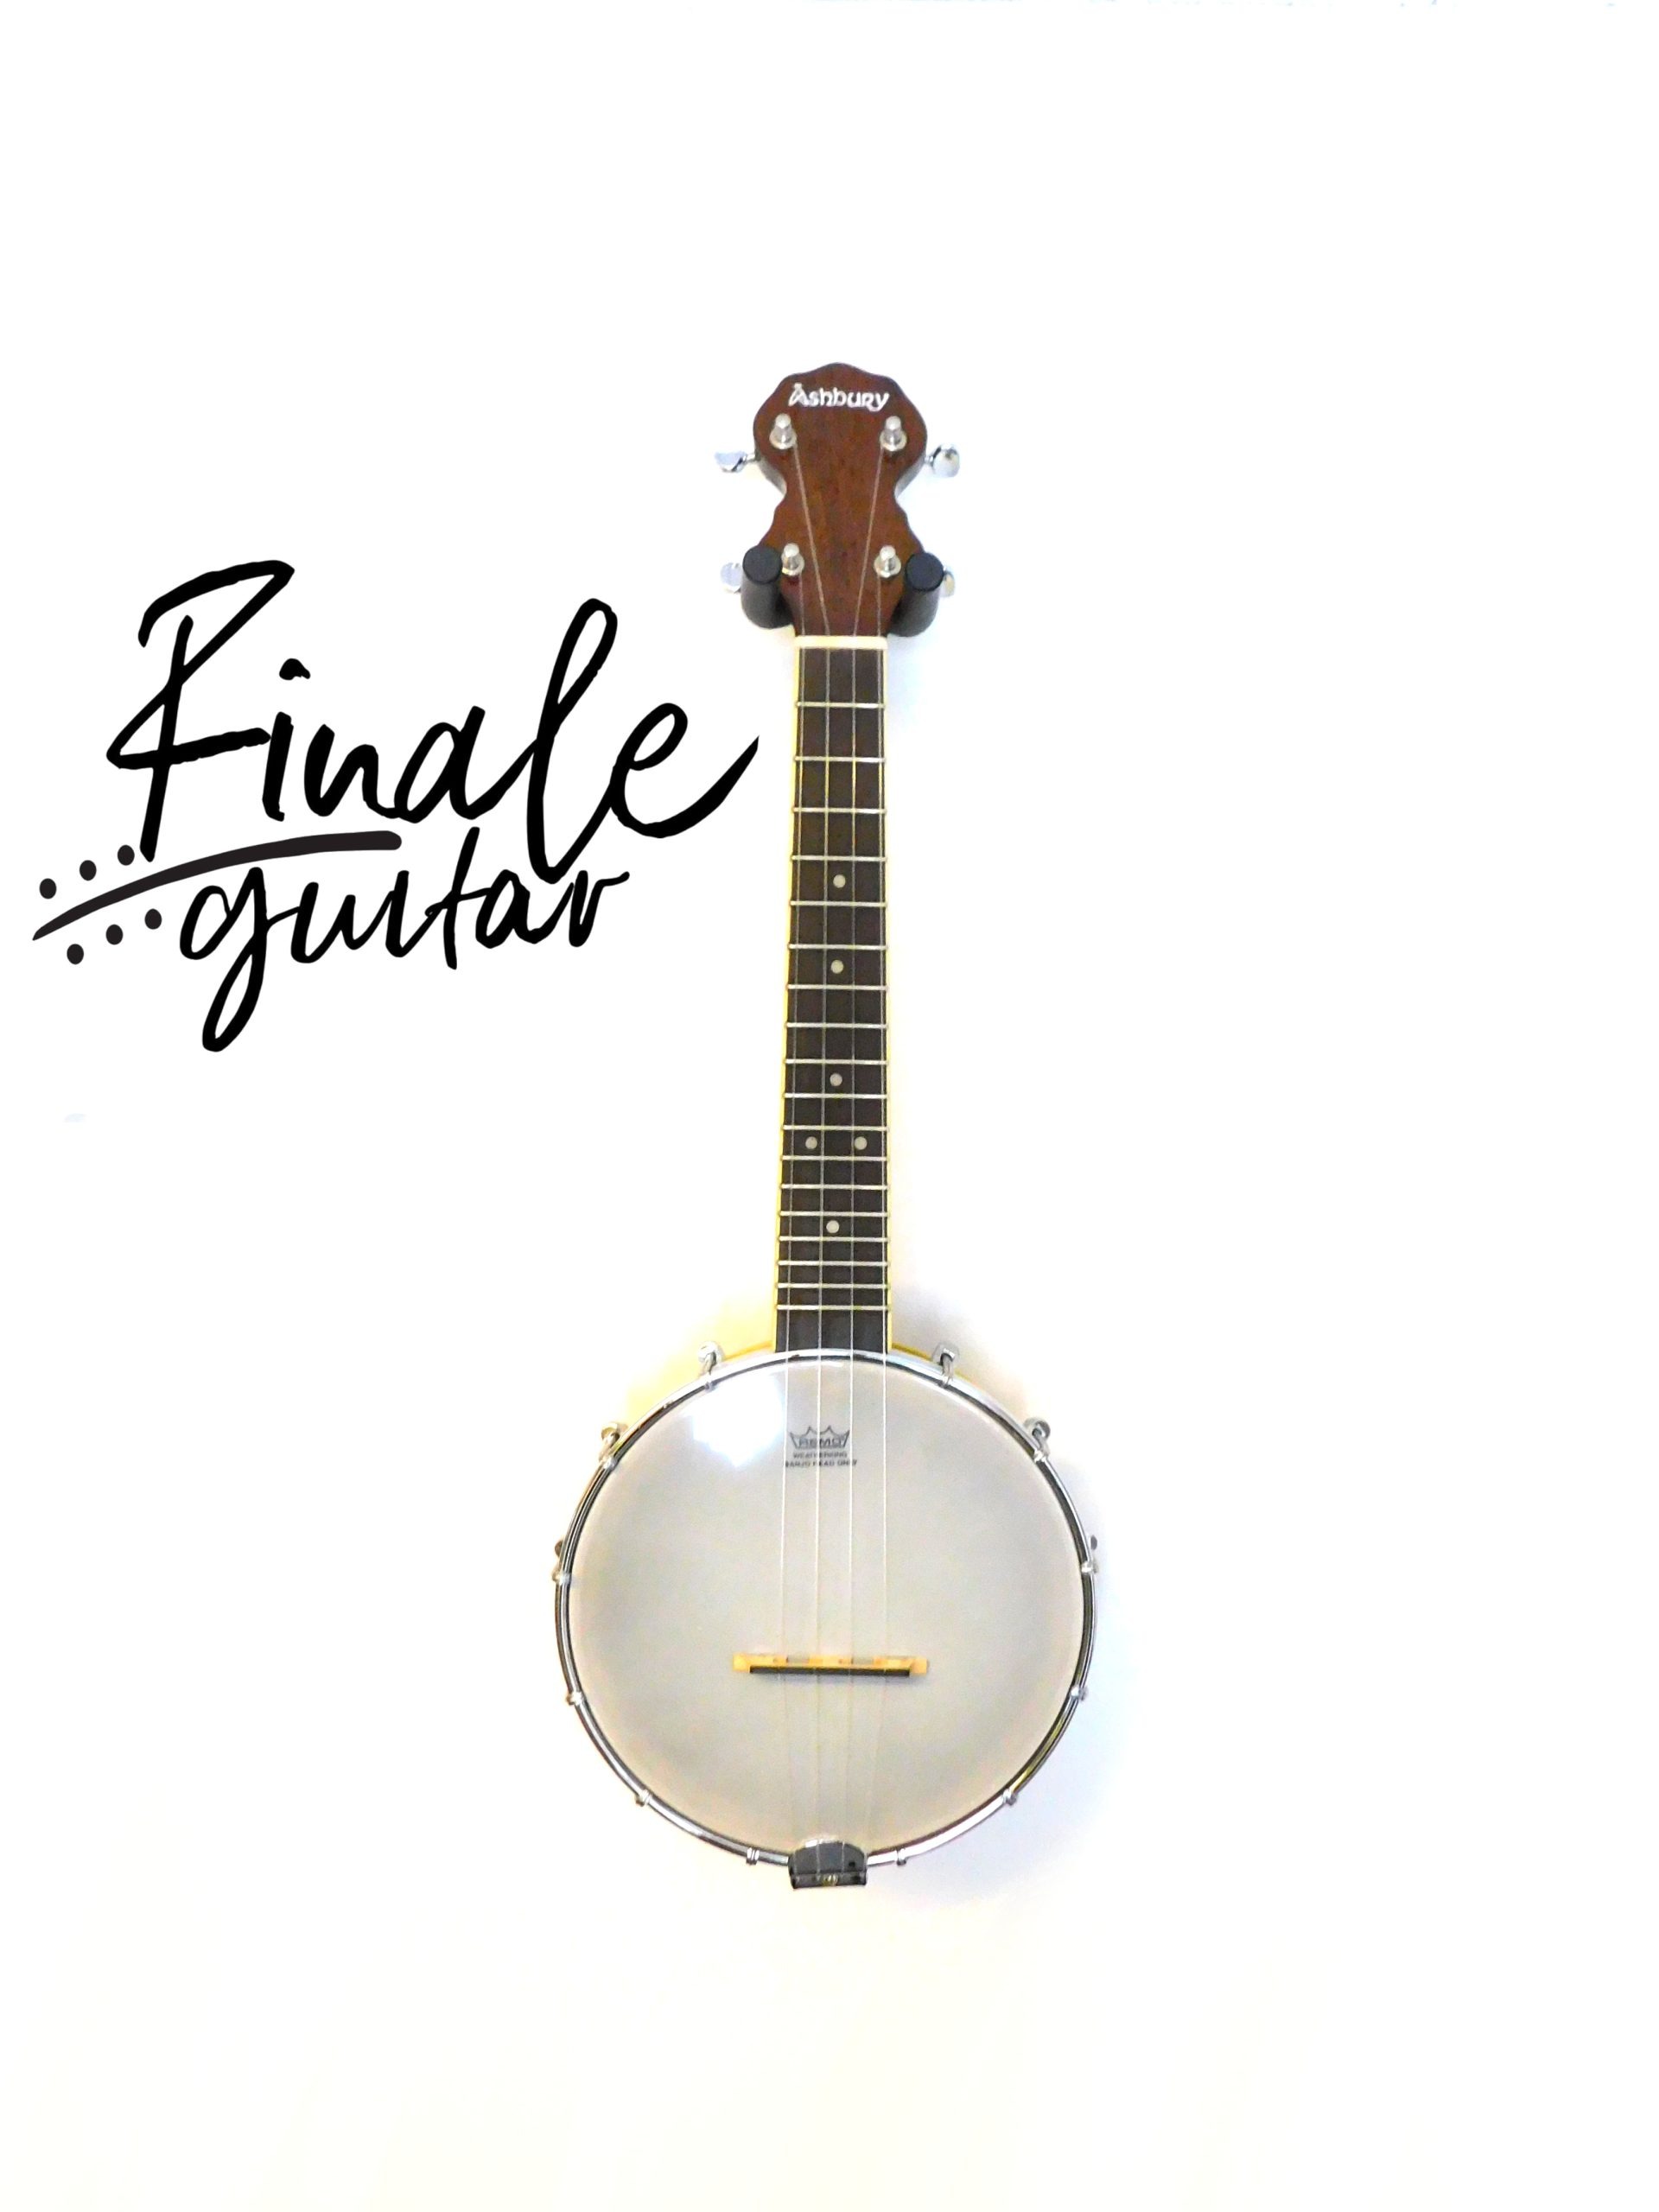 Ashbury banjolele for sale in our Sheffield guitar shop, Finale Guitar